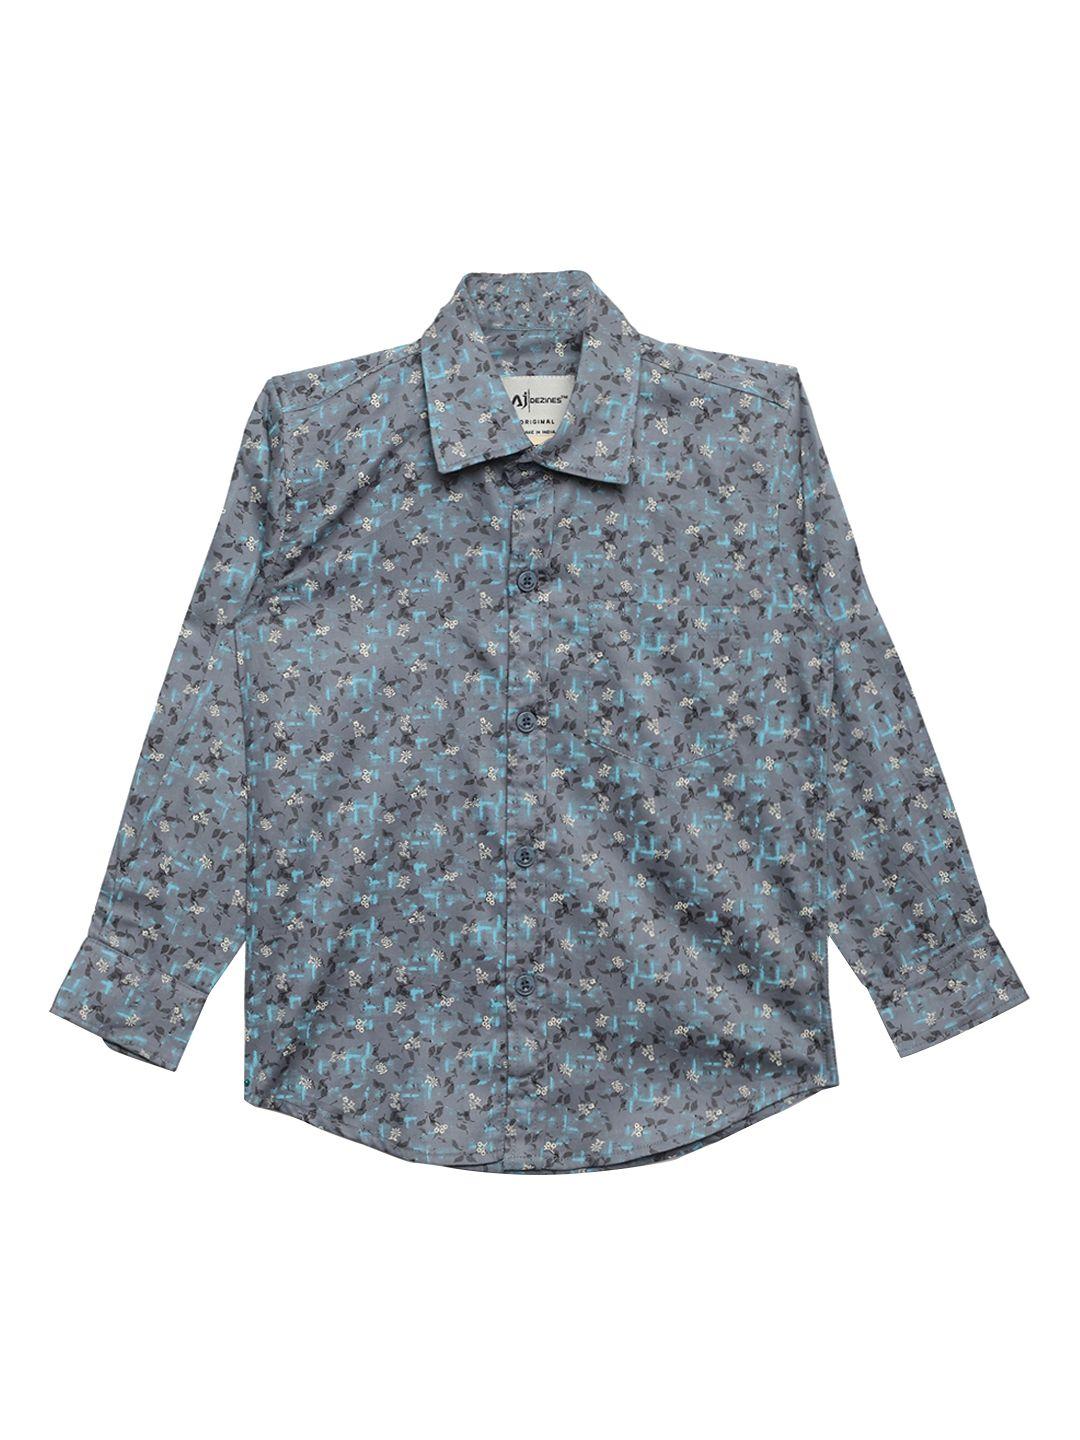 aj dezines boys grey & blue regular fit floral printed casual shirt